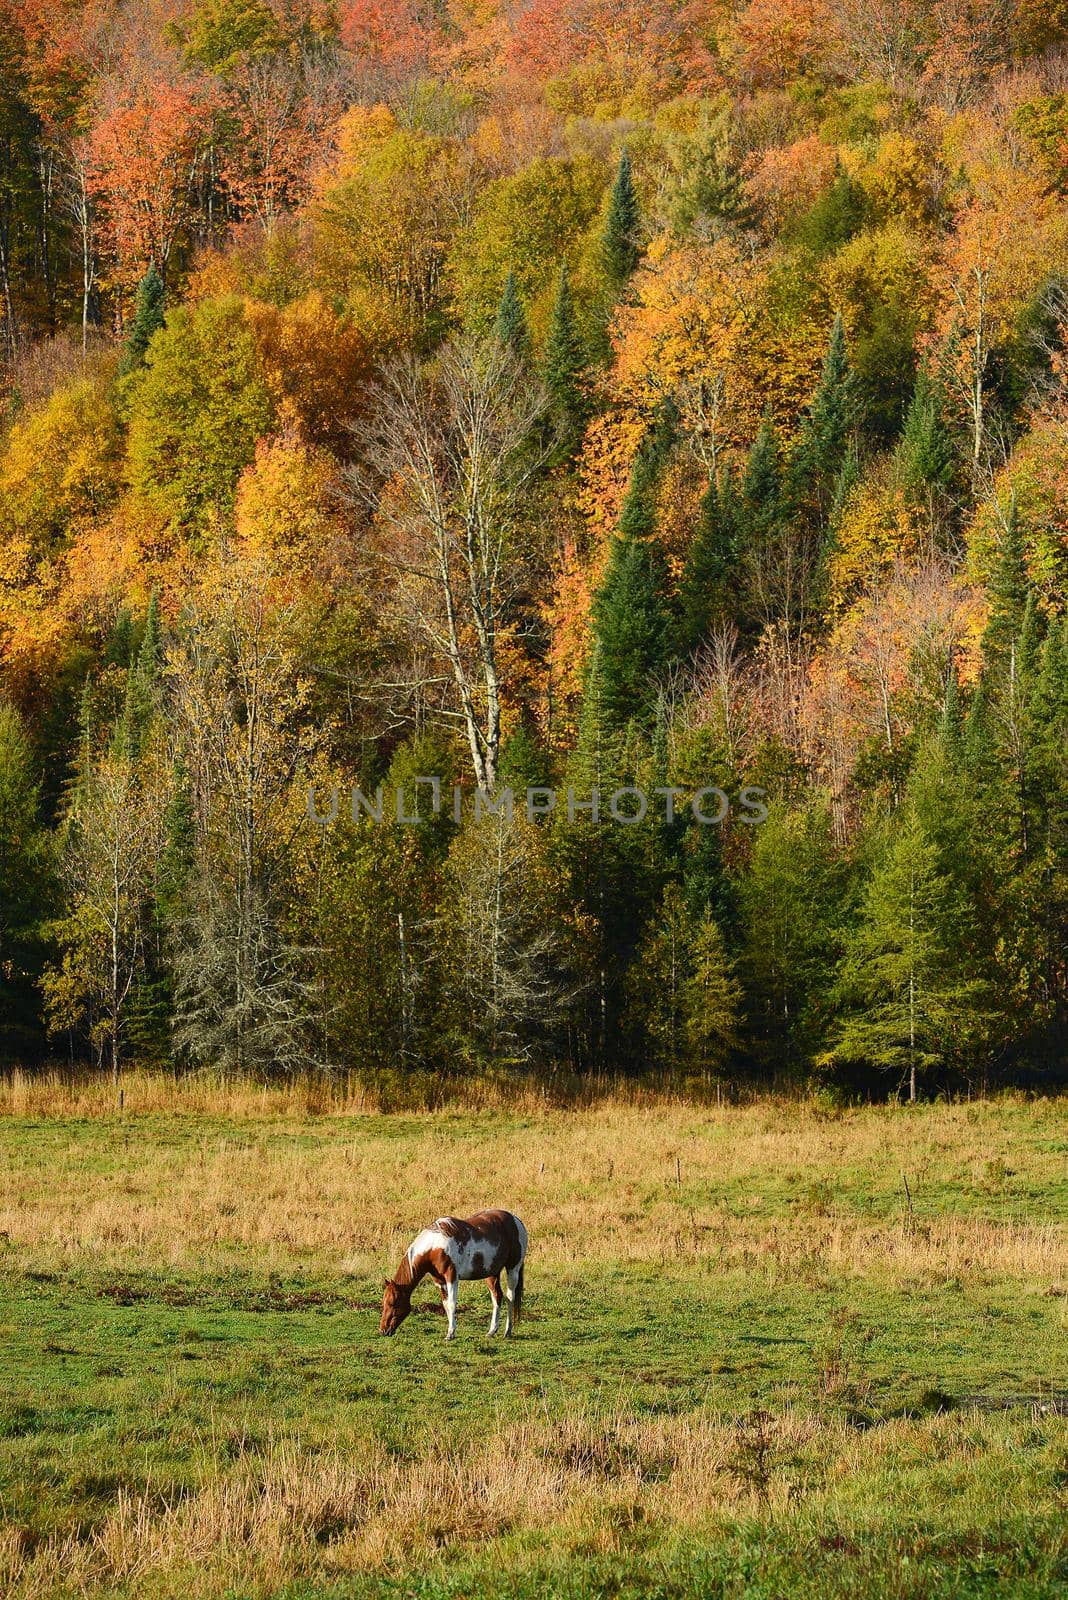 horse in a field by porbital